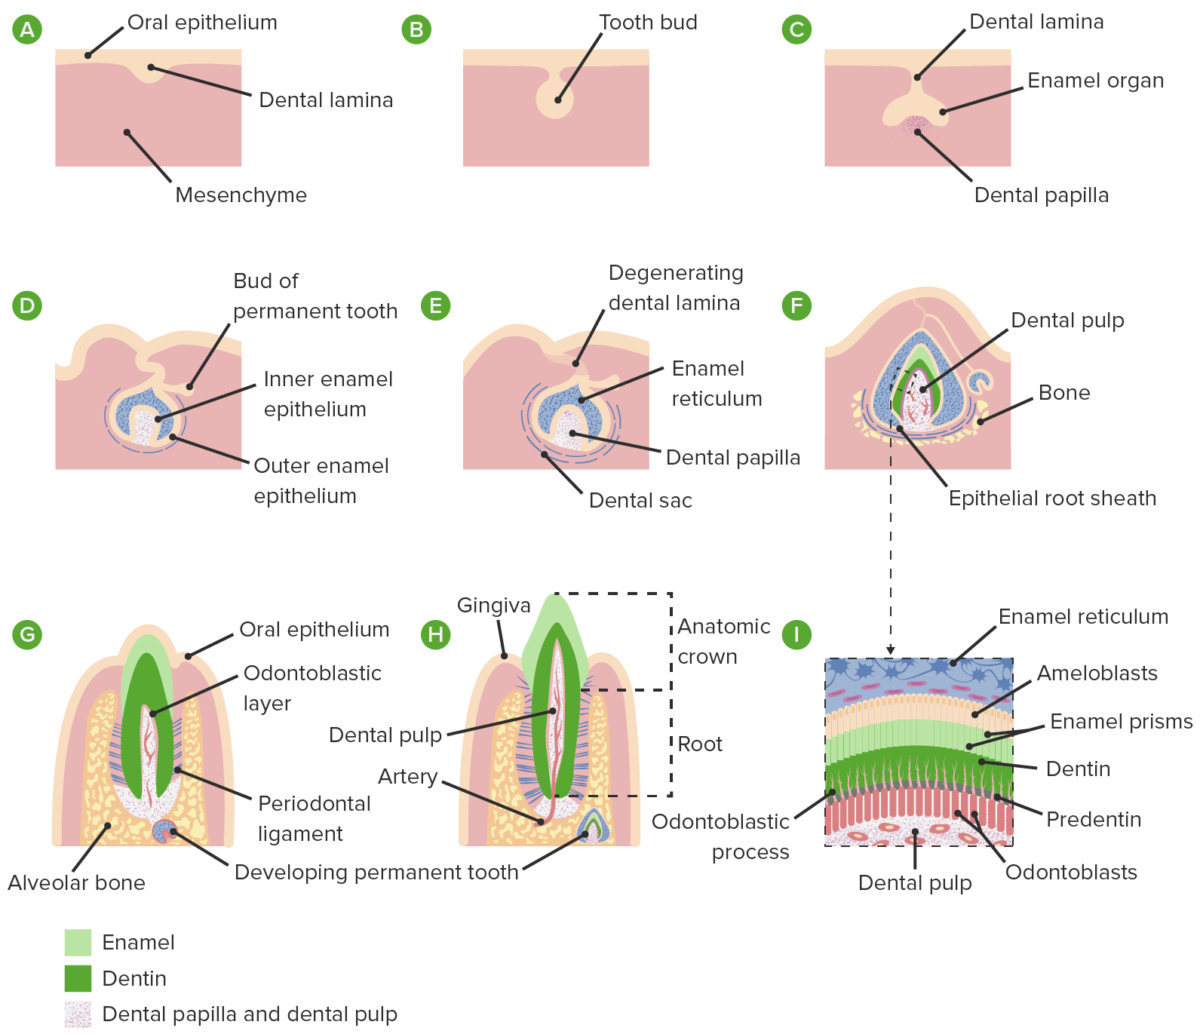 Formation of dental papilla and dental sac